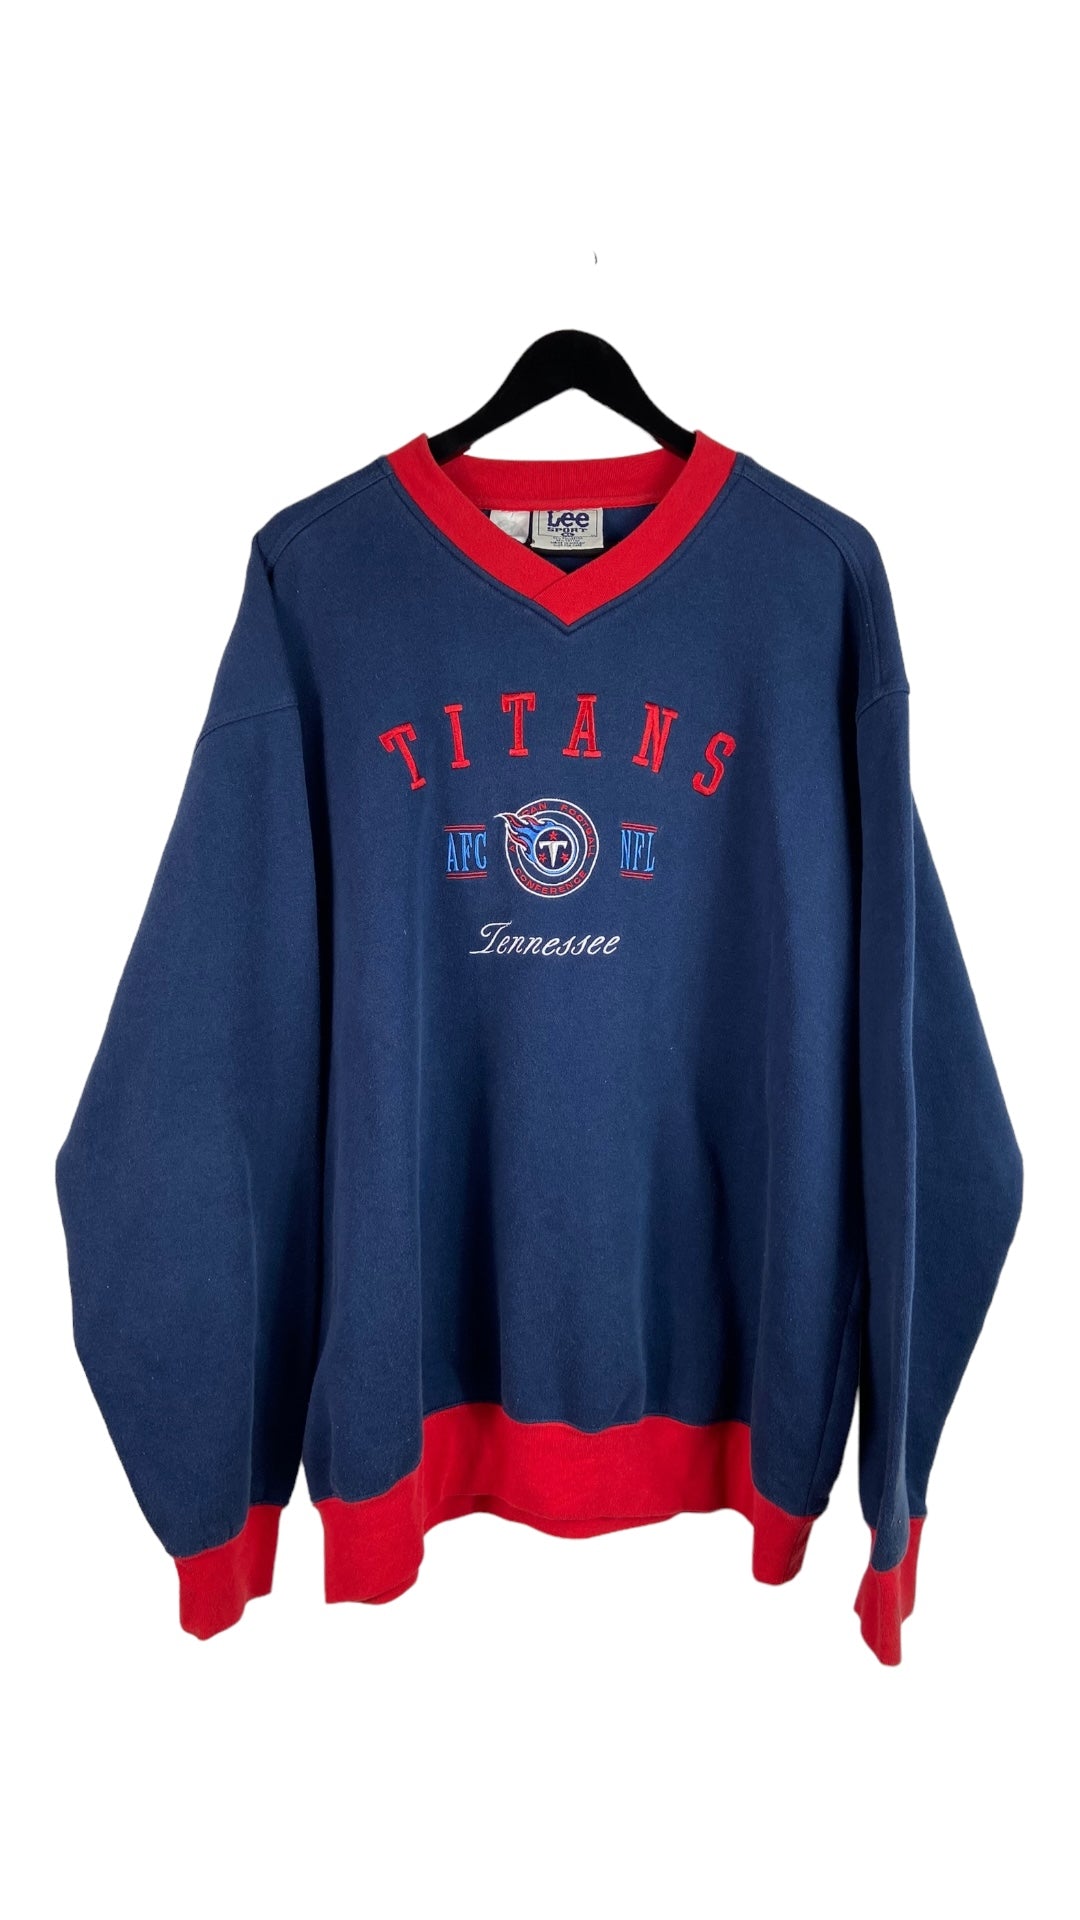 VTG Tennessee Titans AFC NFL Sweatshirt Sz 2XL